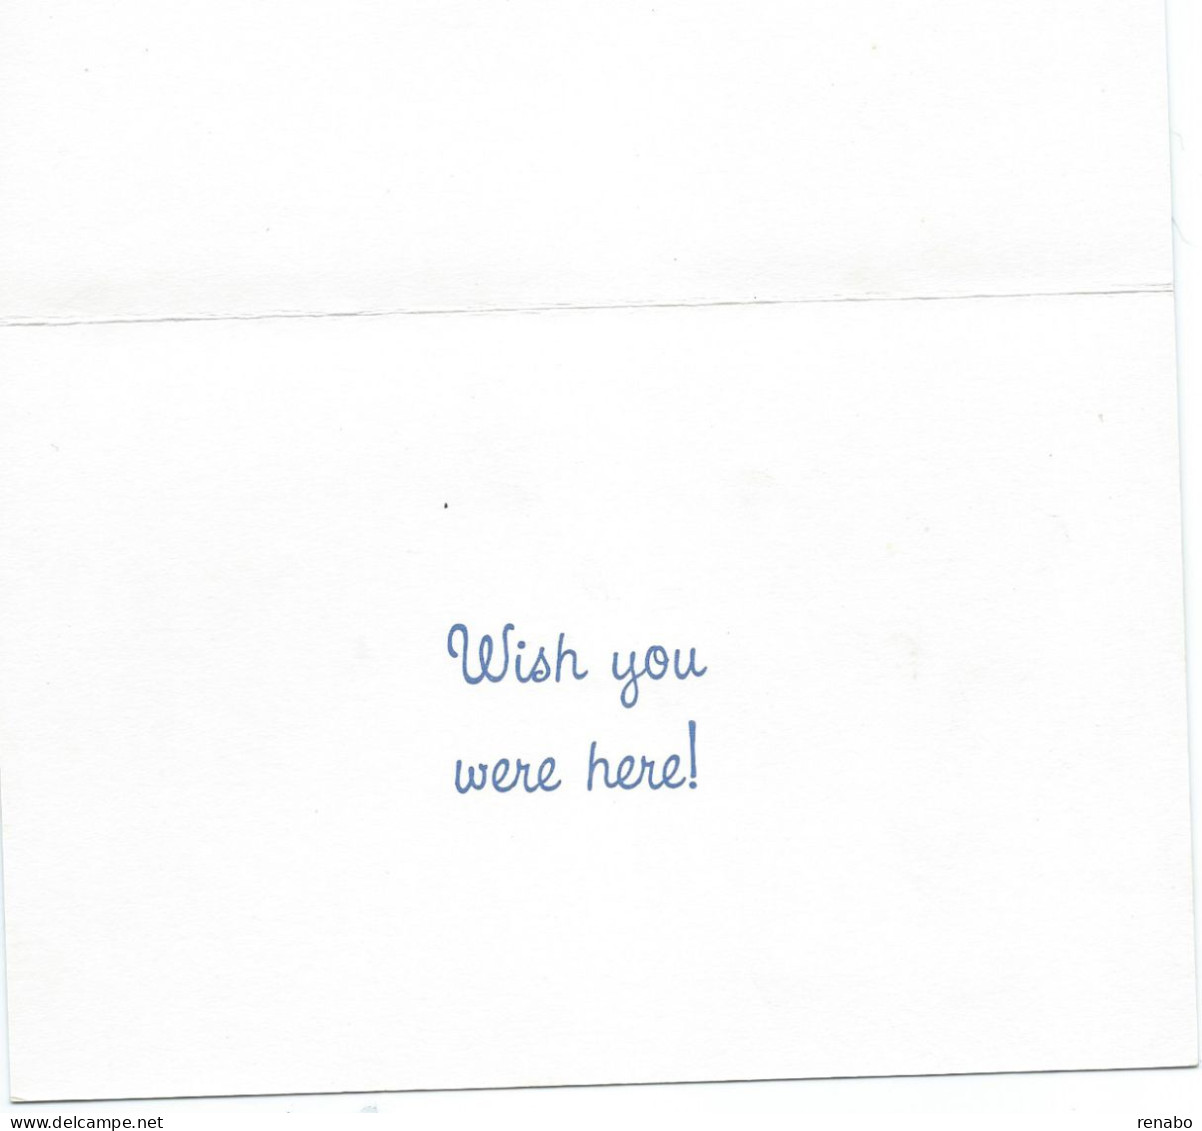 India ; Tiger , INDIA POST. Envelope With Ticket. Postal Stationery Unused . - Raubkatzen